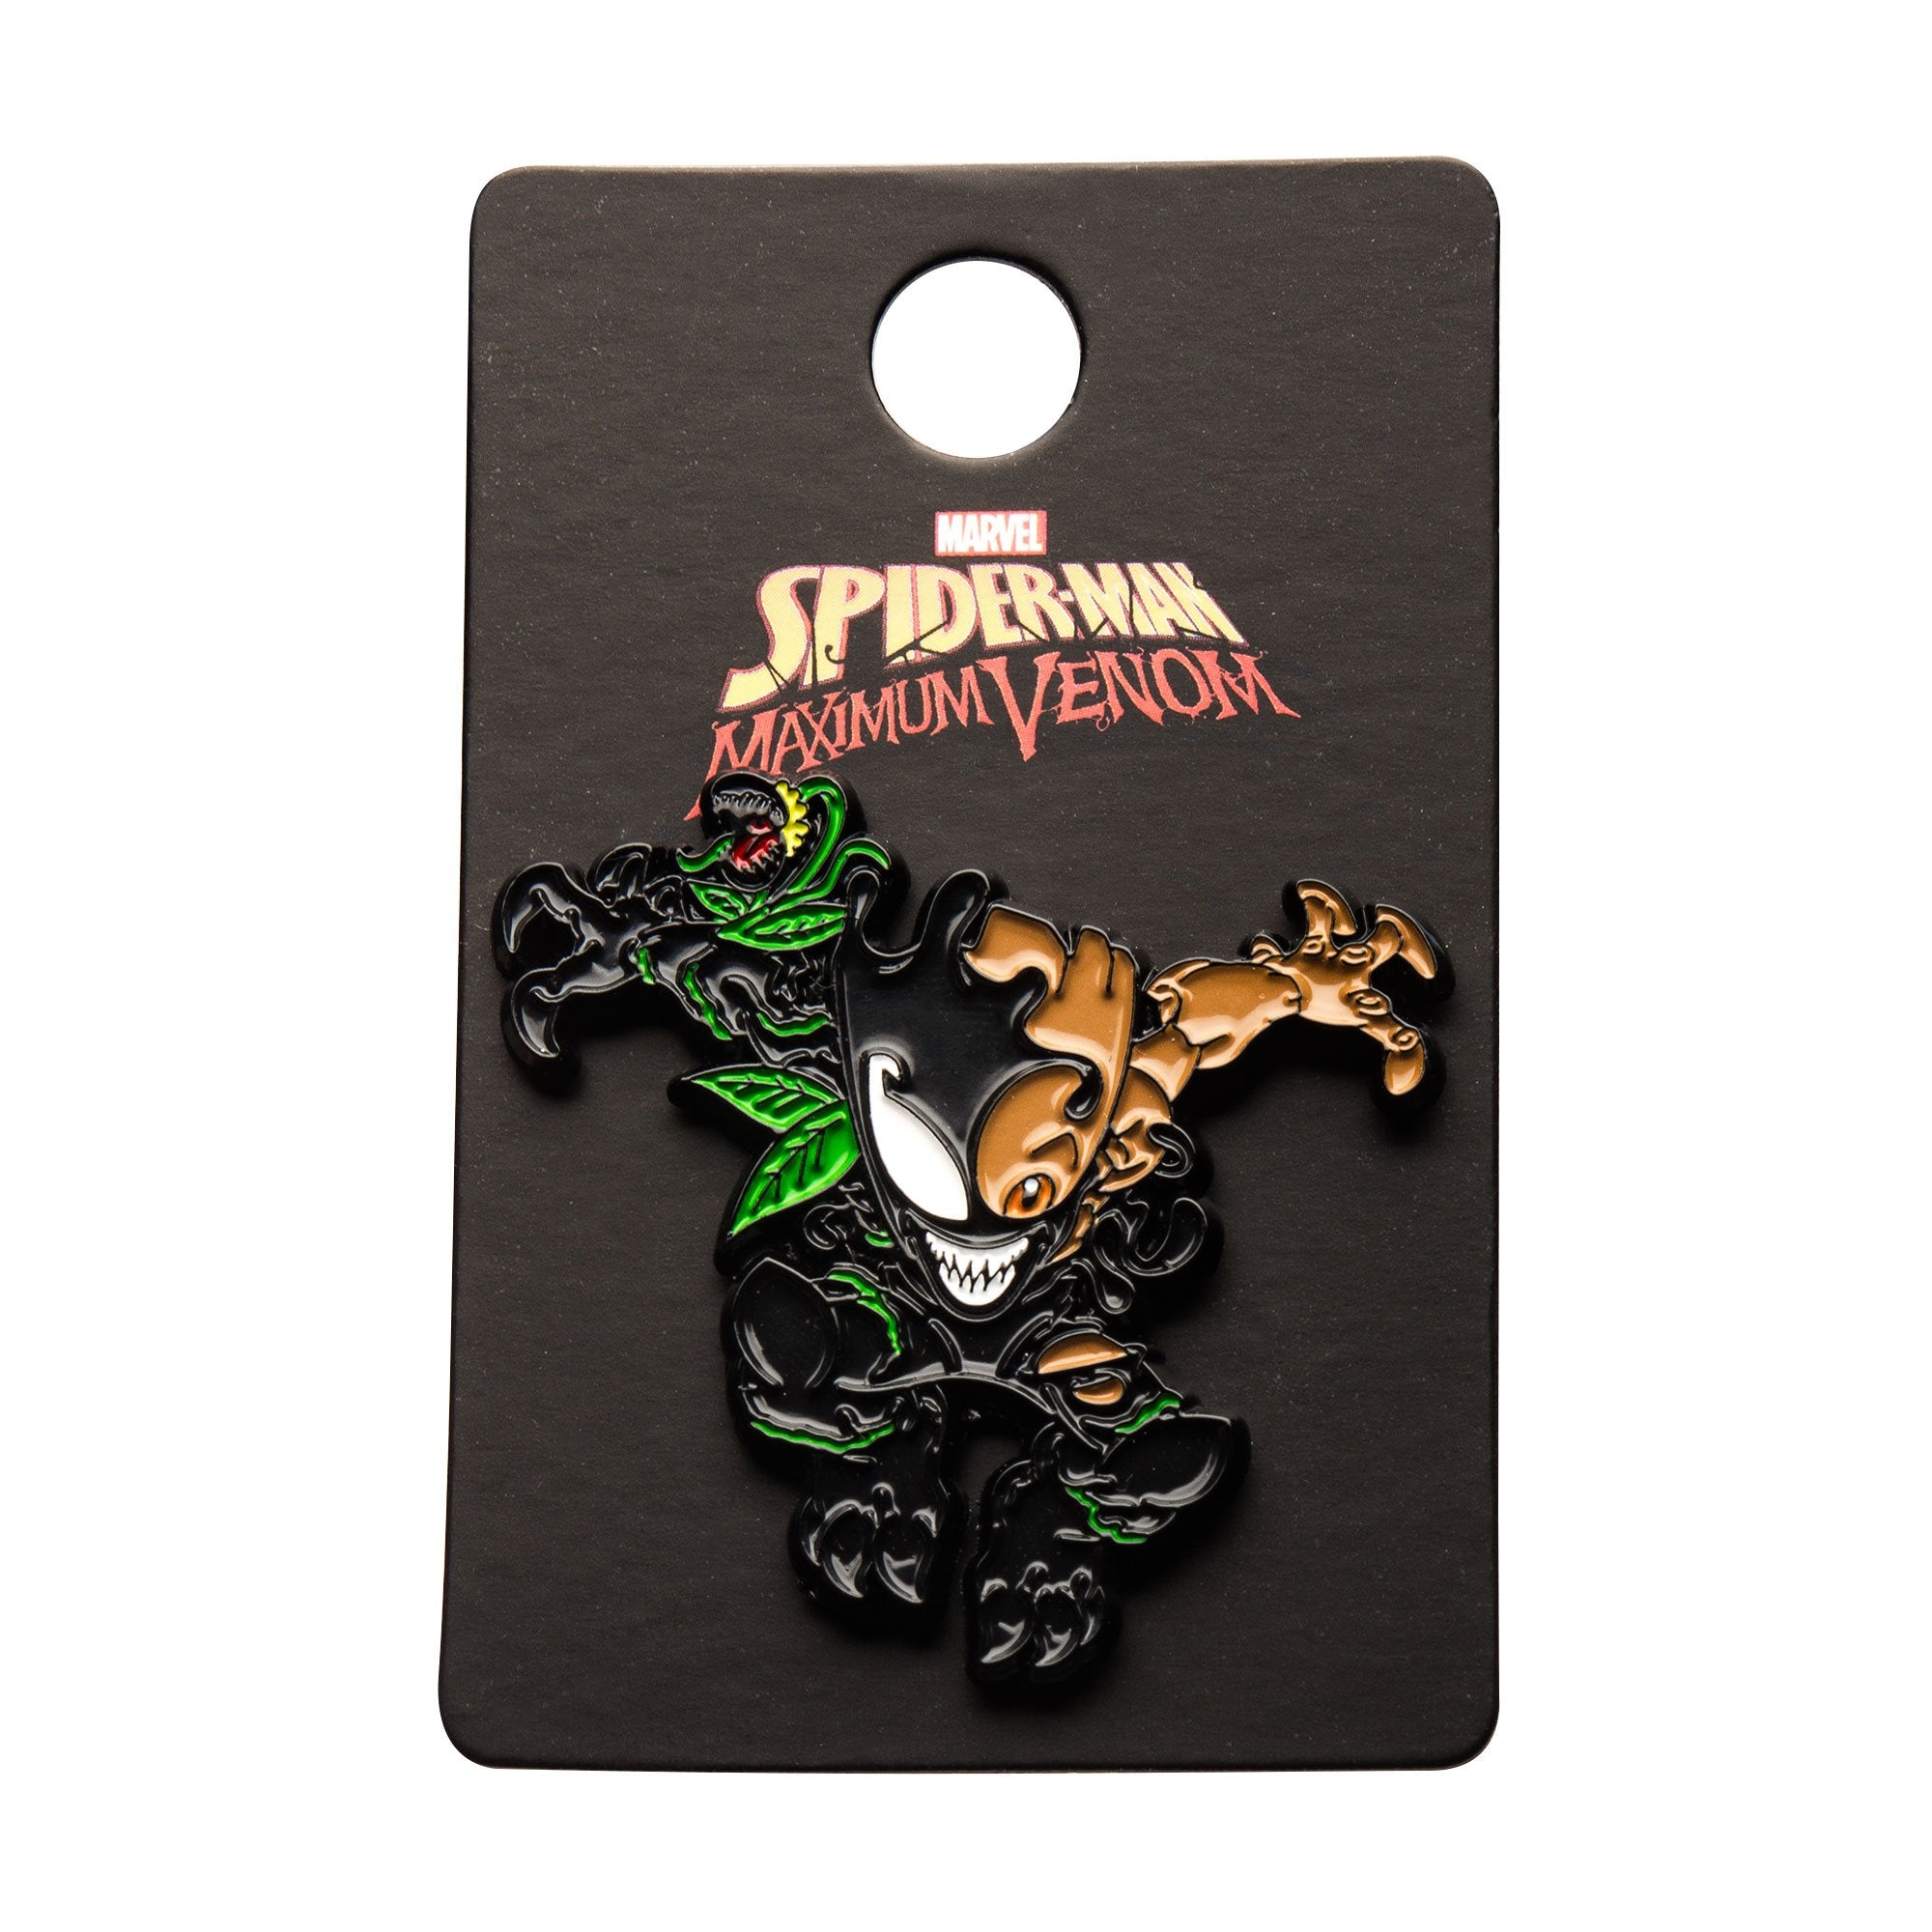 Marvel Spider-Man Maximum Venom Groot Lapel Pin [NOT AVAILABLE]